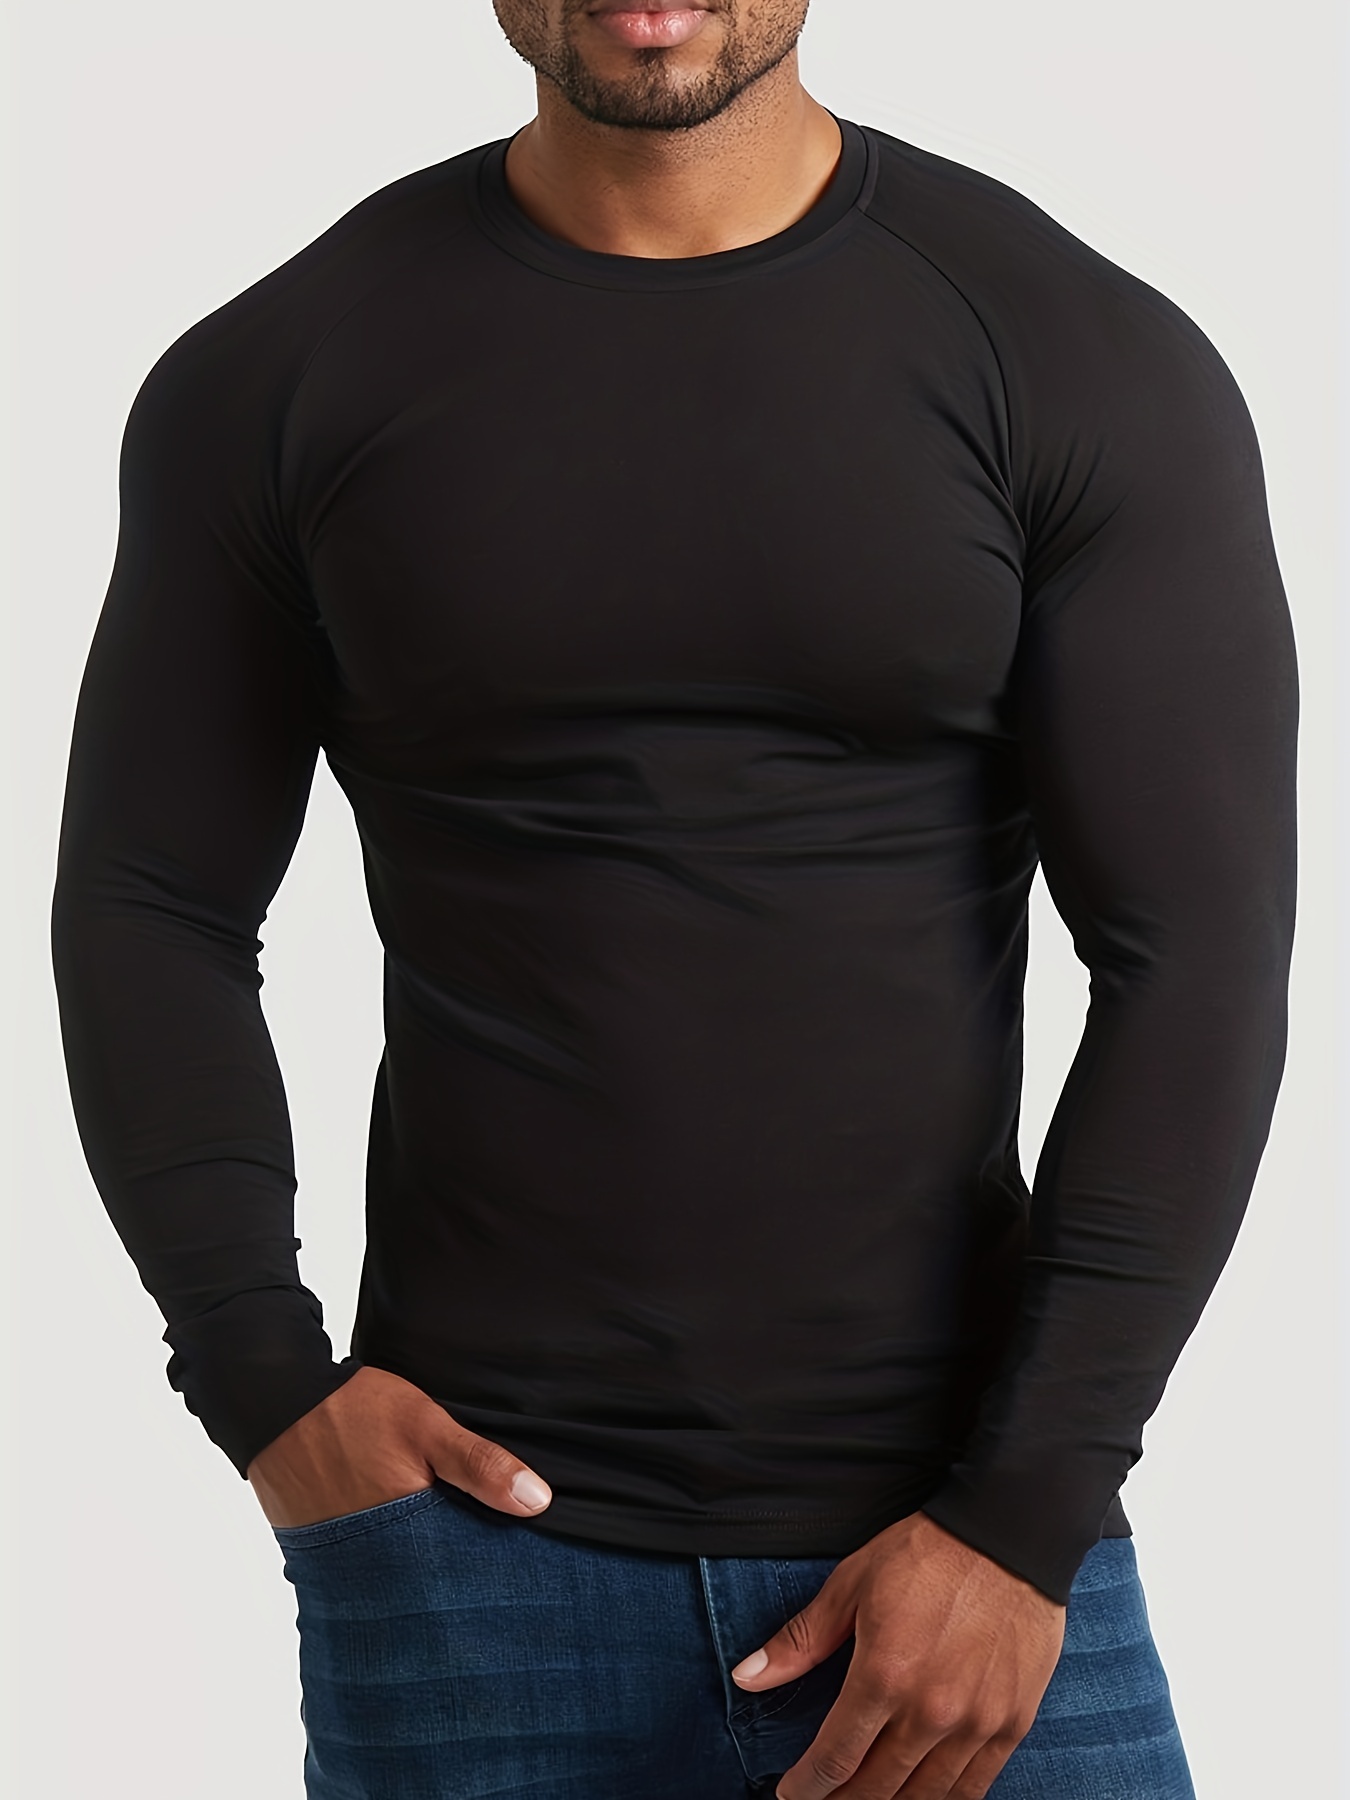 Long Sleeve Workout Shirts Men  Men Fitness Long Sleeve Shirts